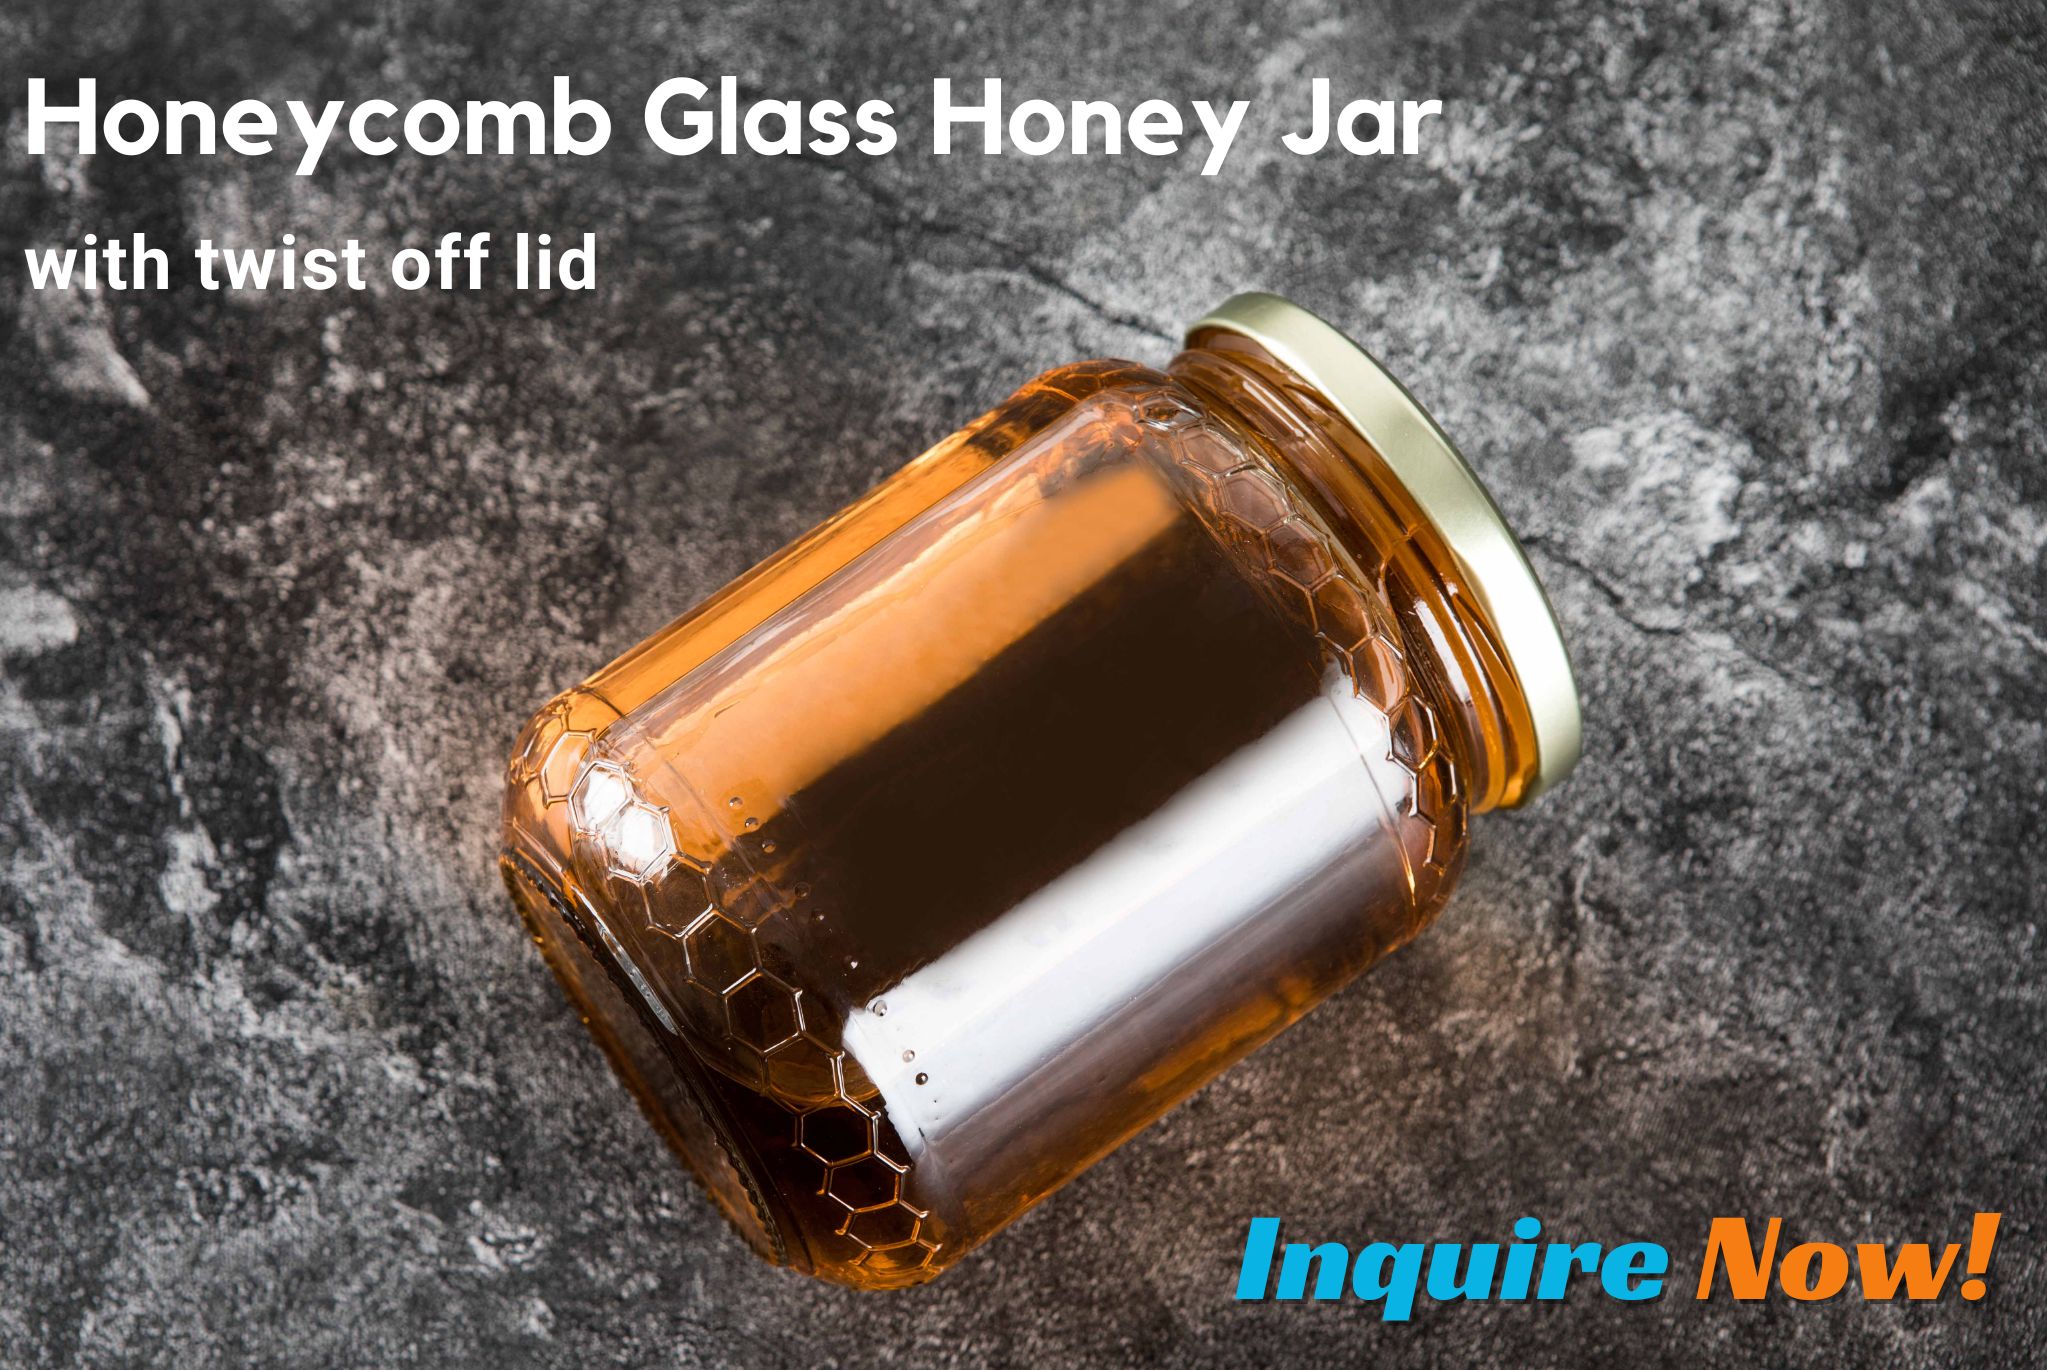 Honeycomb glass honey jar